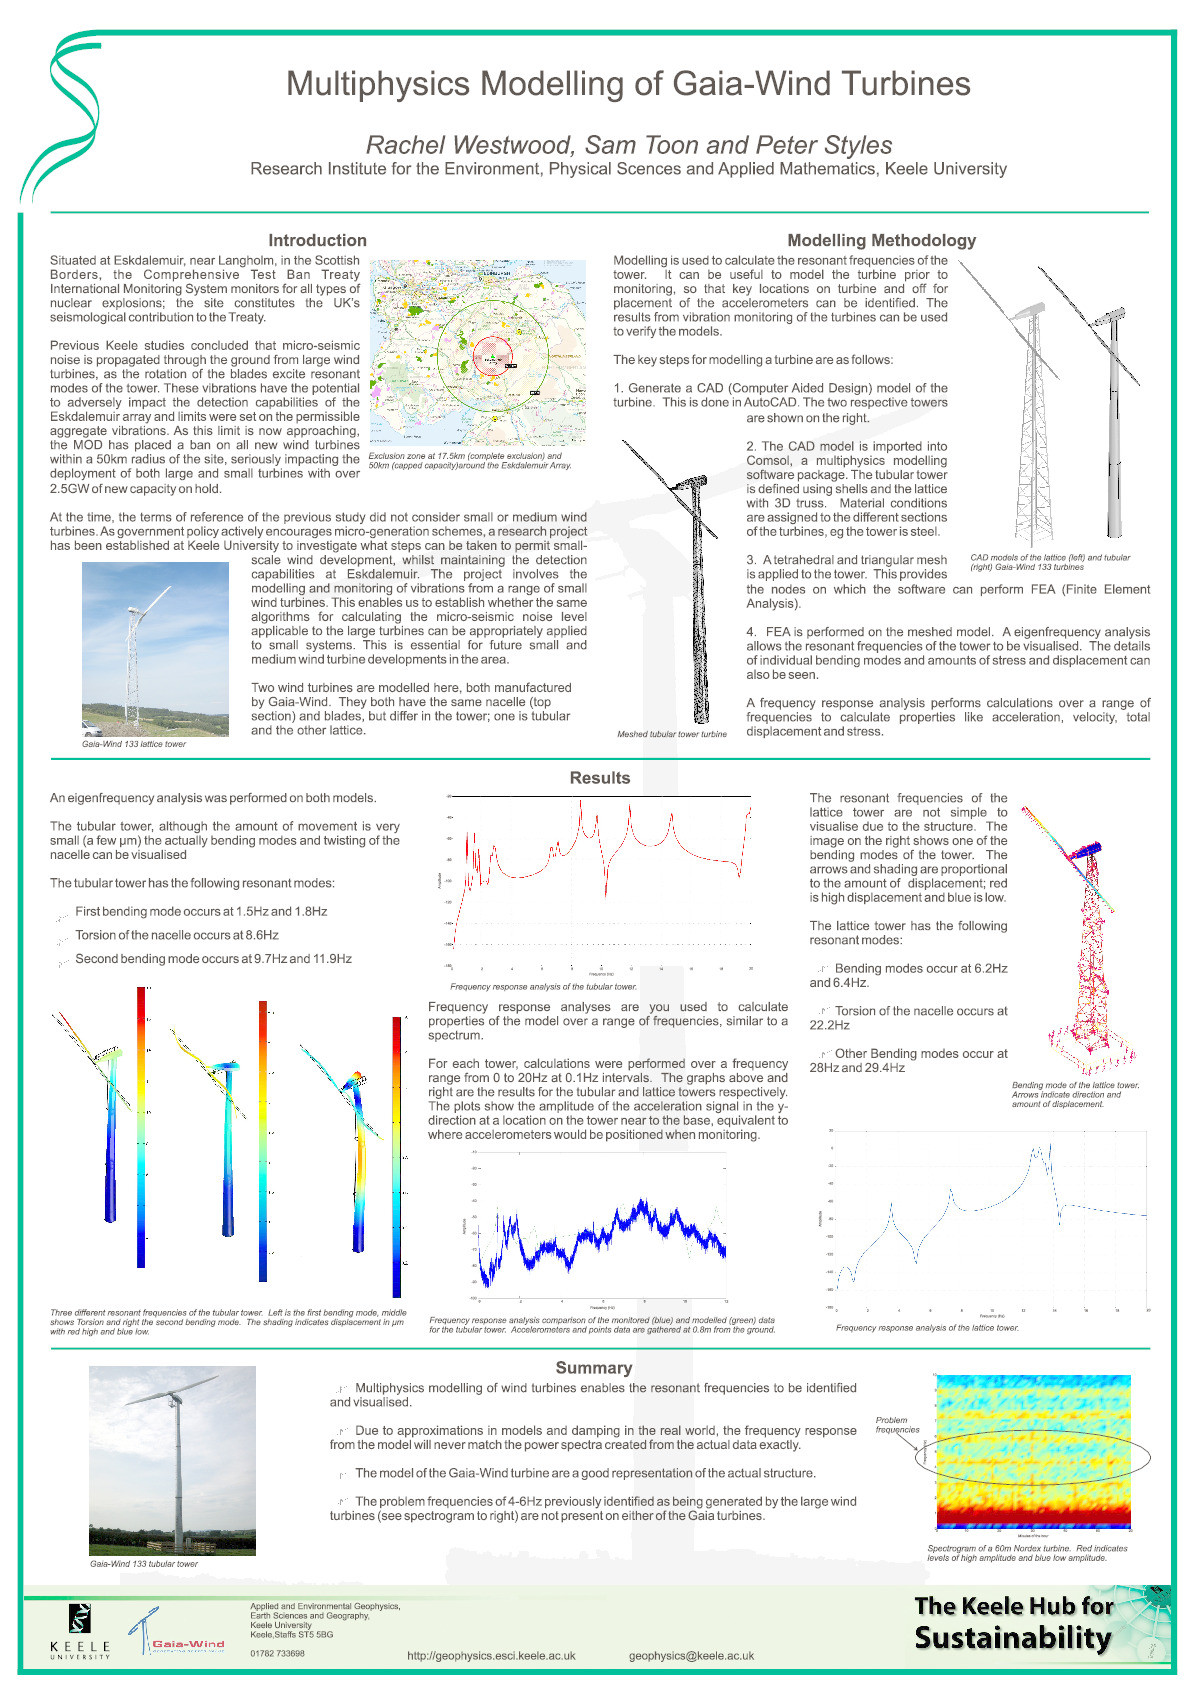 Multiphysics Modelling of Gaia-Wind Turbines Thumbnail